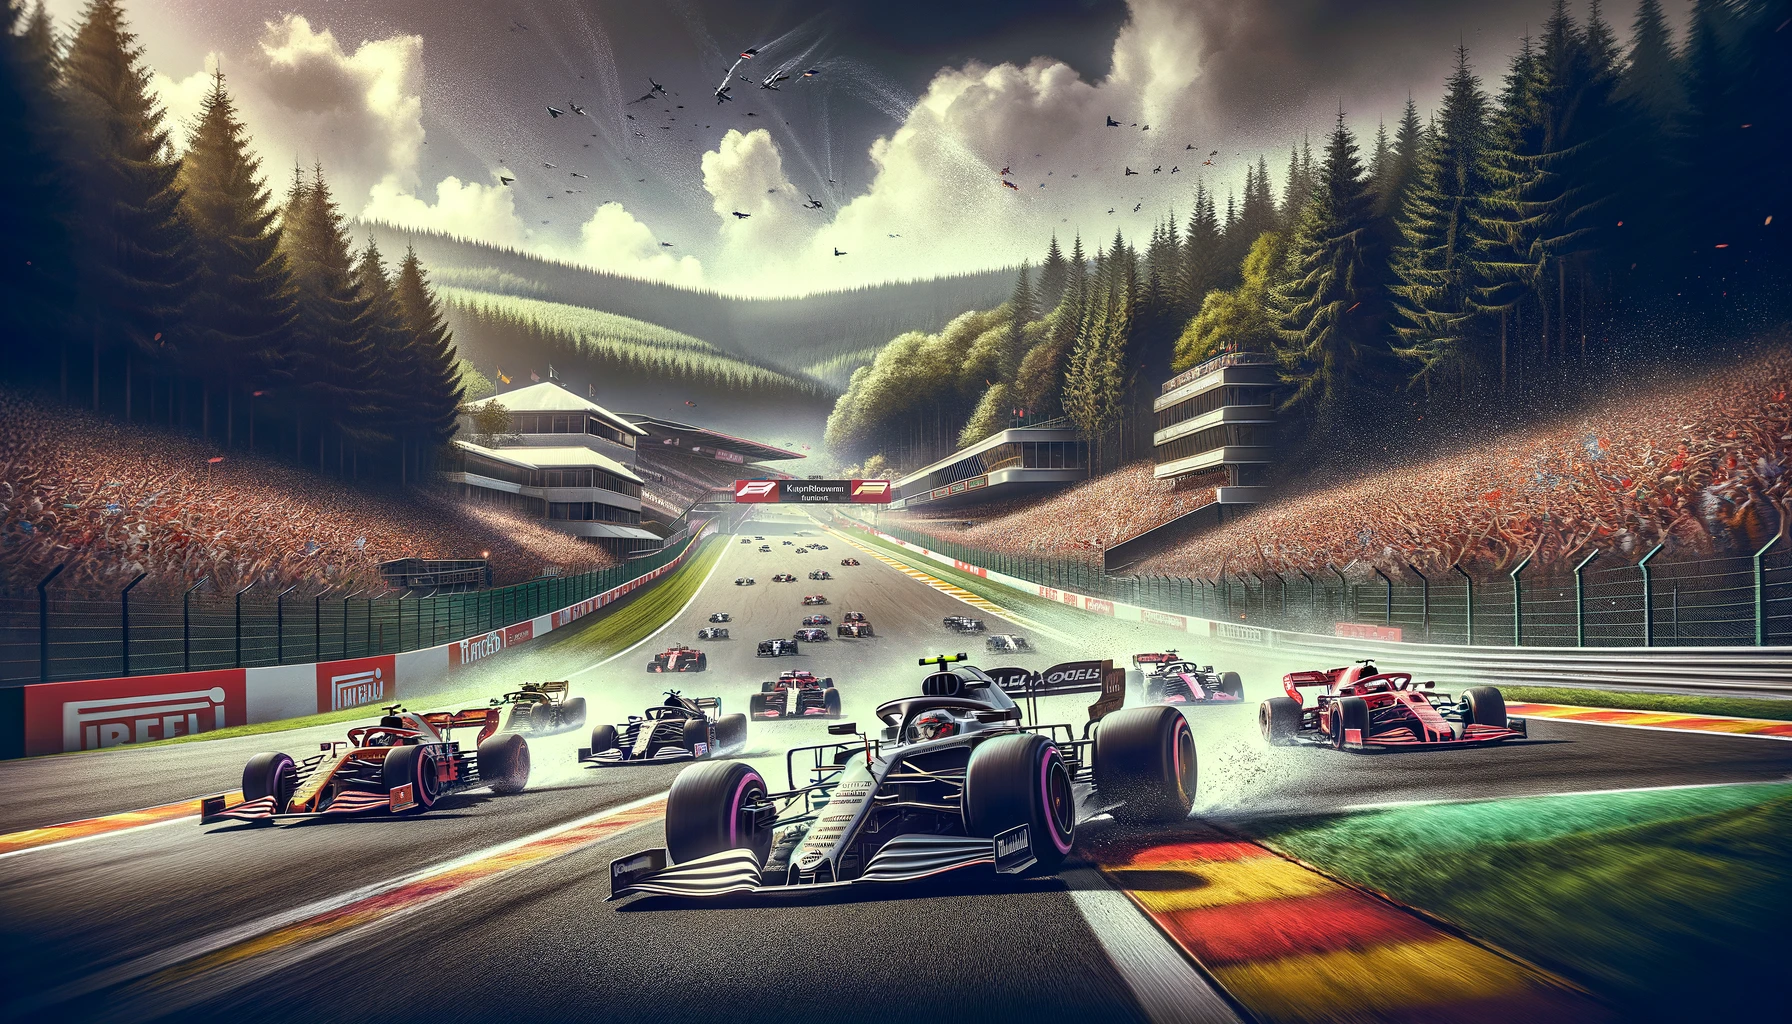 Spa F1 race scene